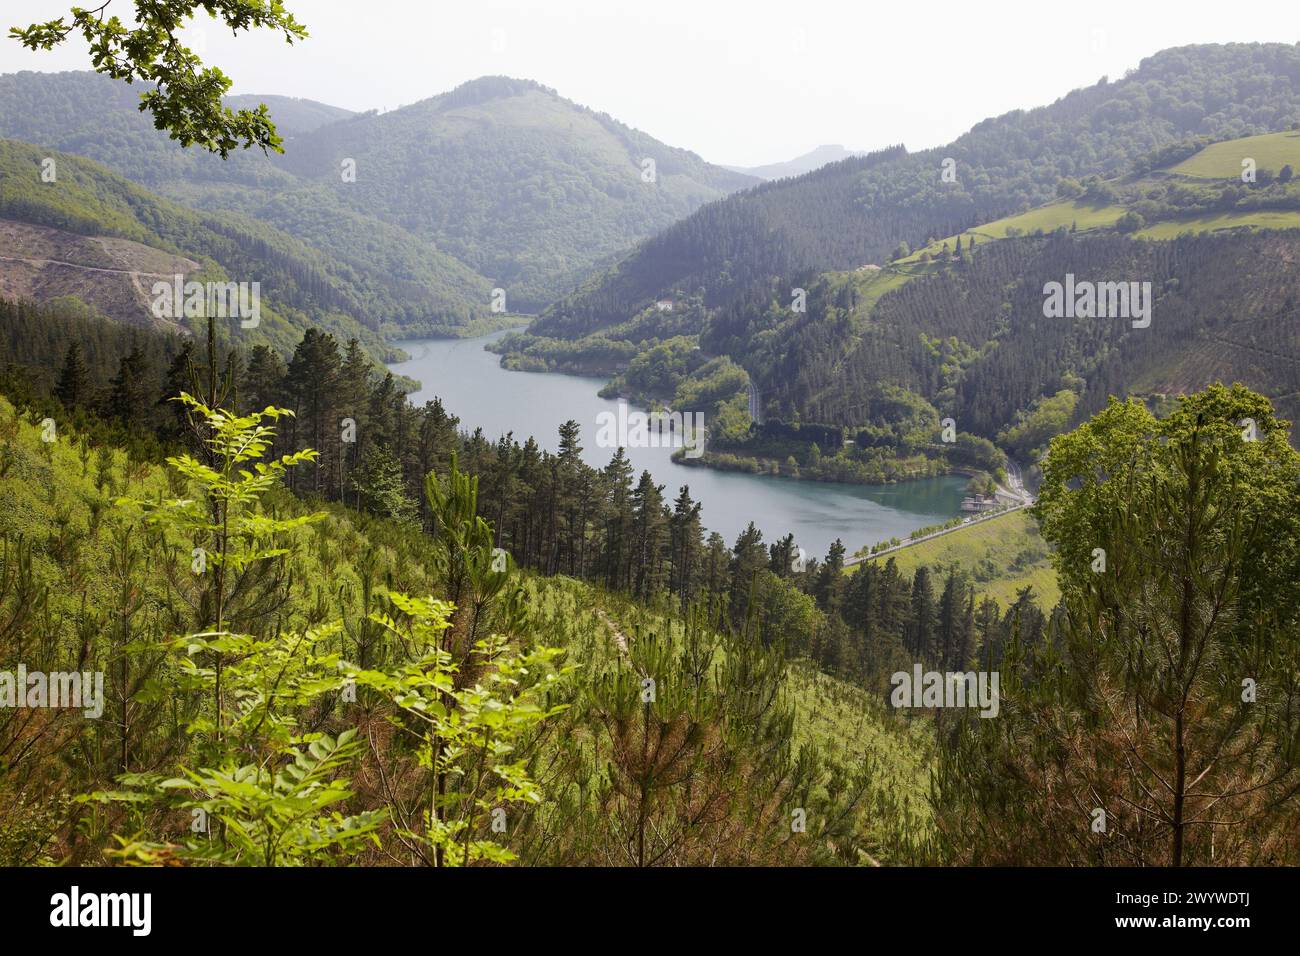 Ibaieder reservoir, Beizama, Guipuzcoa, Basque Country, Spain. Stock Photo